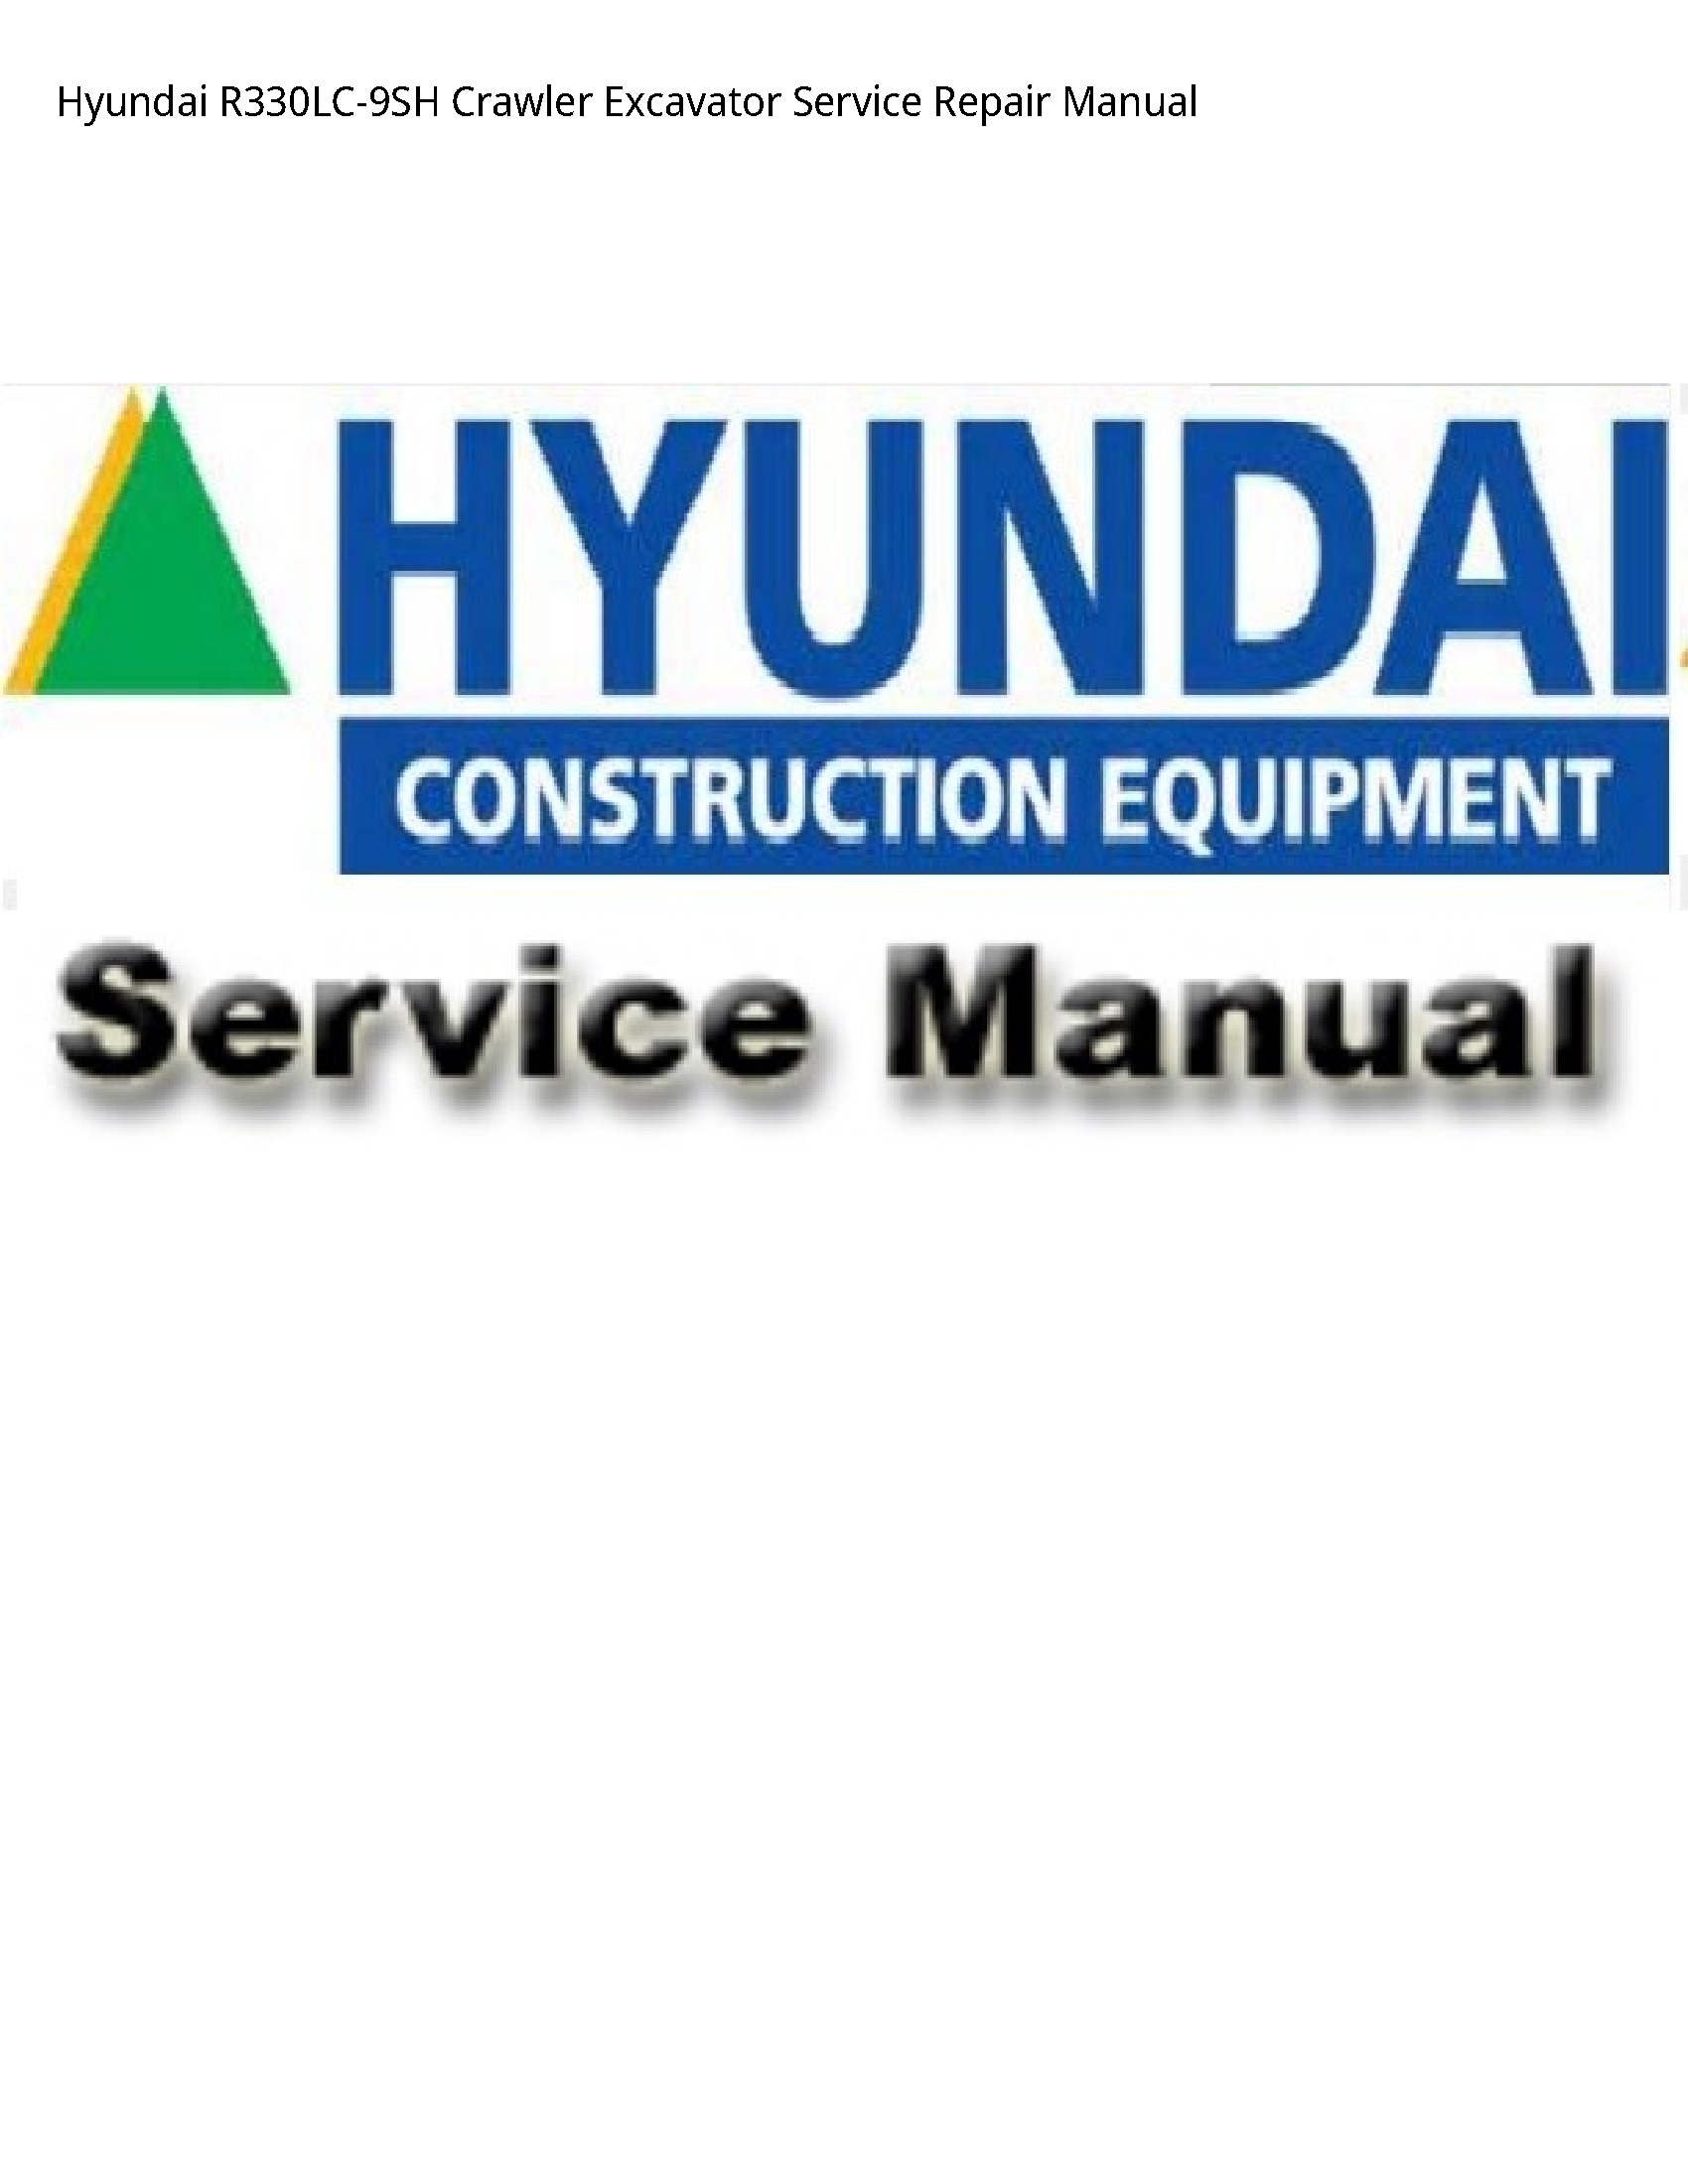 Hyundai R330LC-9SH Crawler Excavator manual